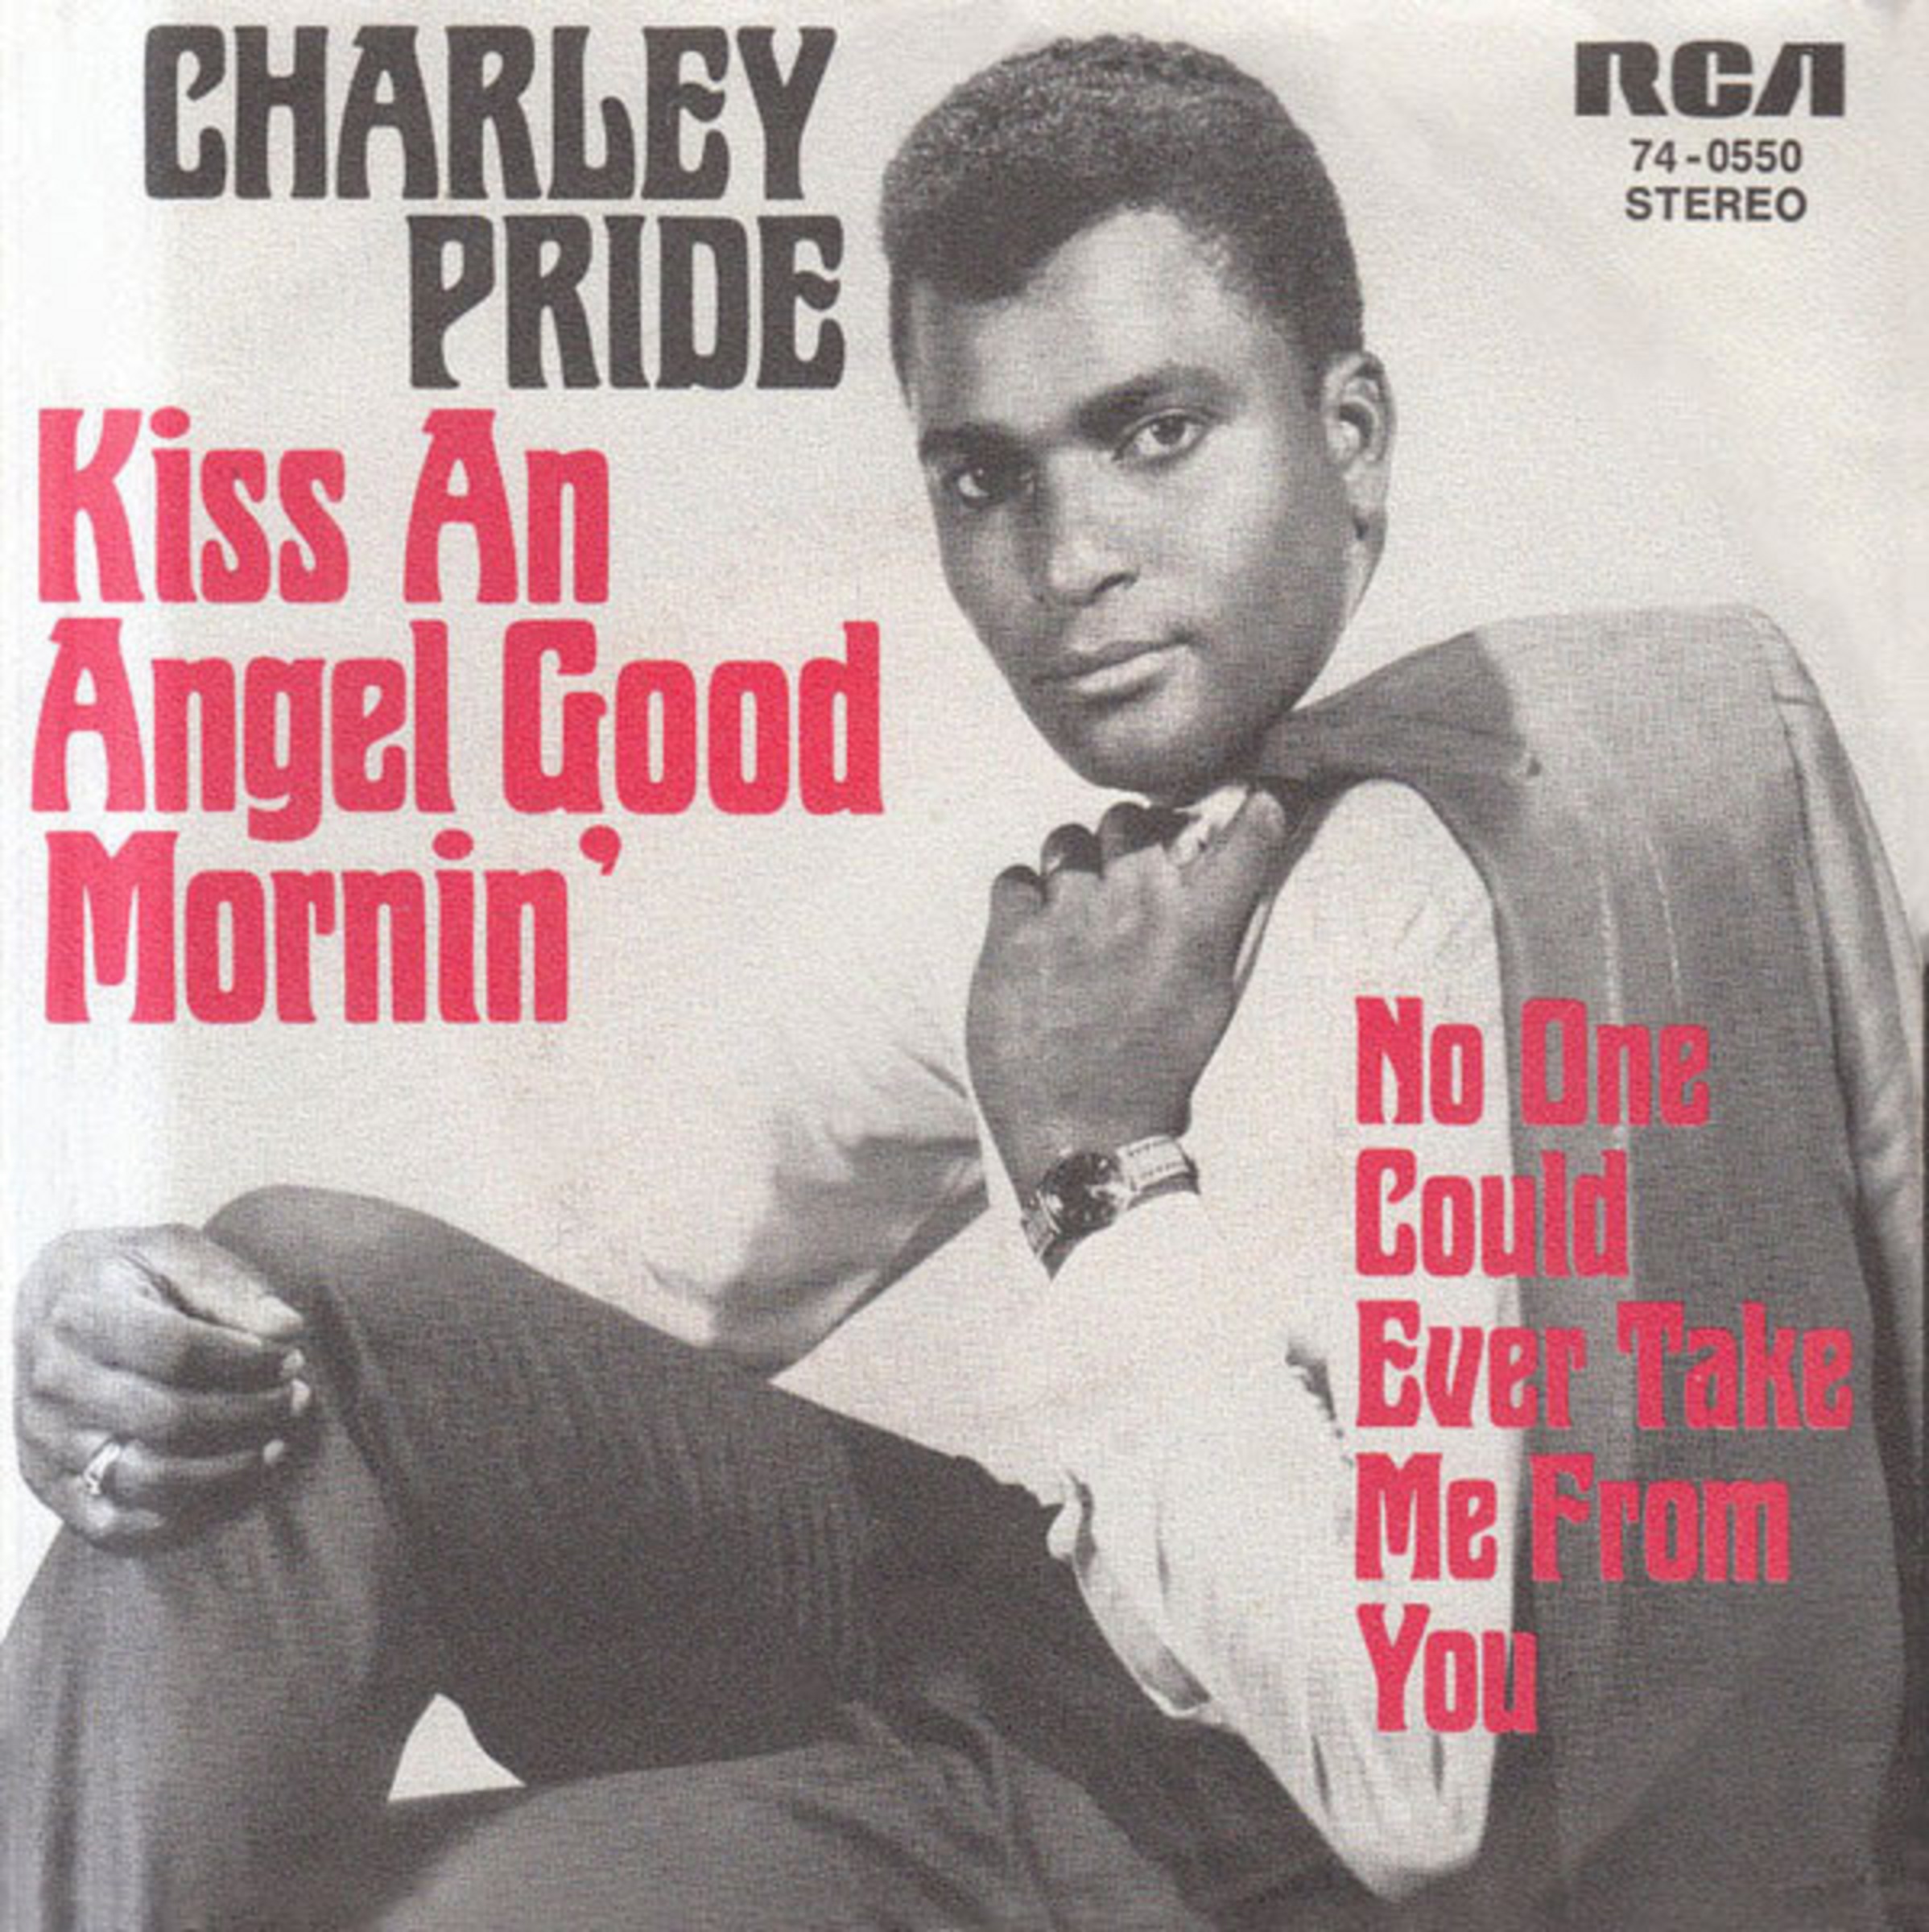 Charley Pride's Chart-Topping Single "Kiss An Angel Good Mornin'" Celebrates 50th Anniversary